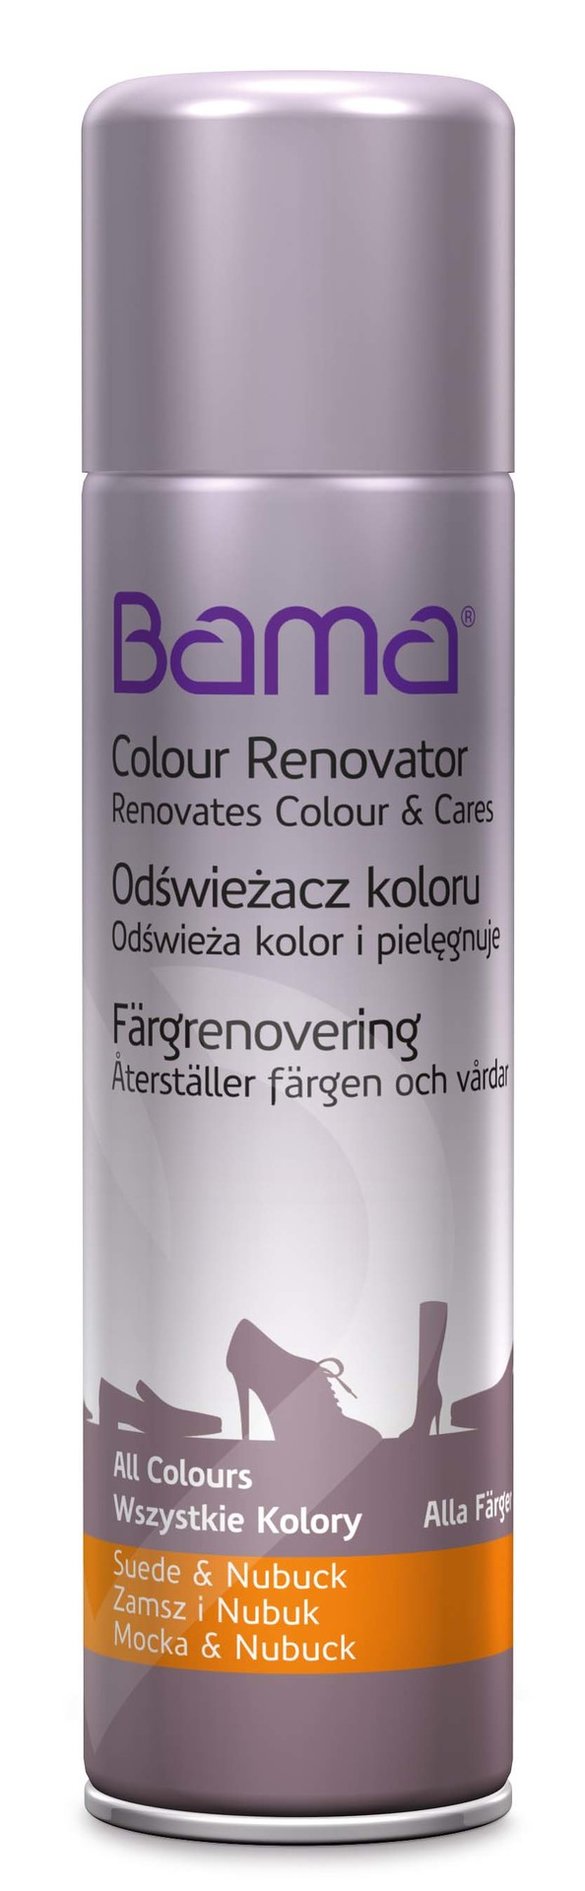 Bama Colour renovator 250ml